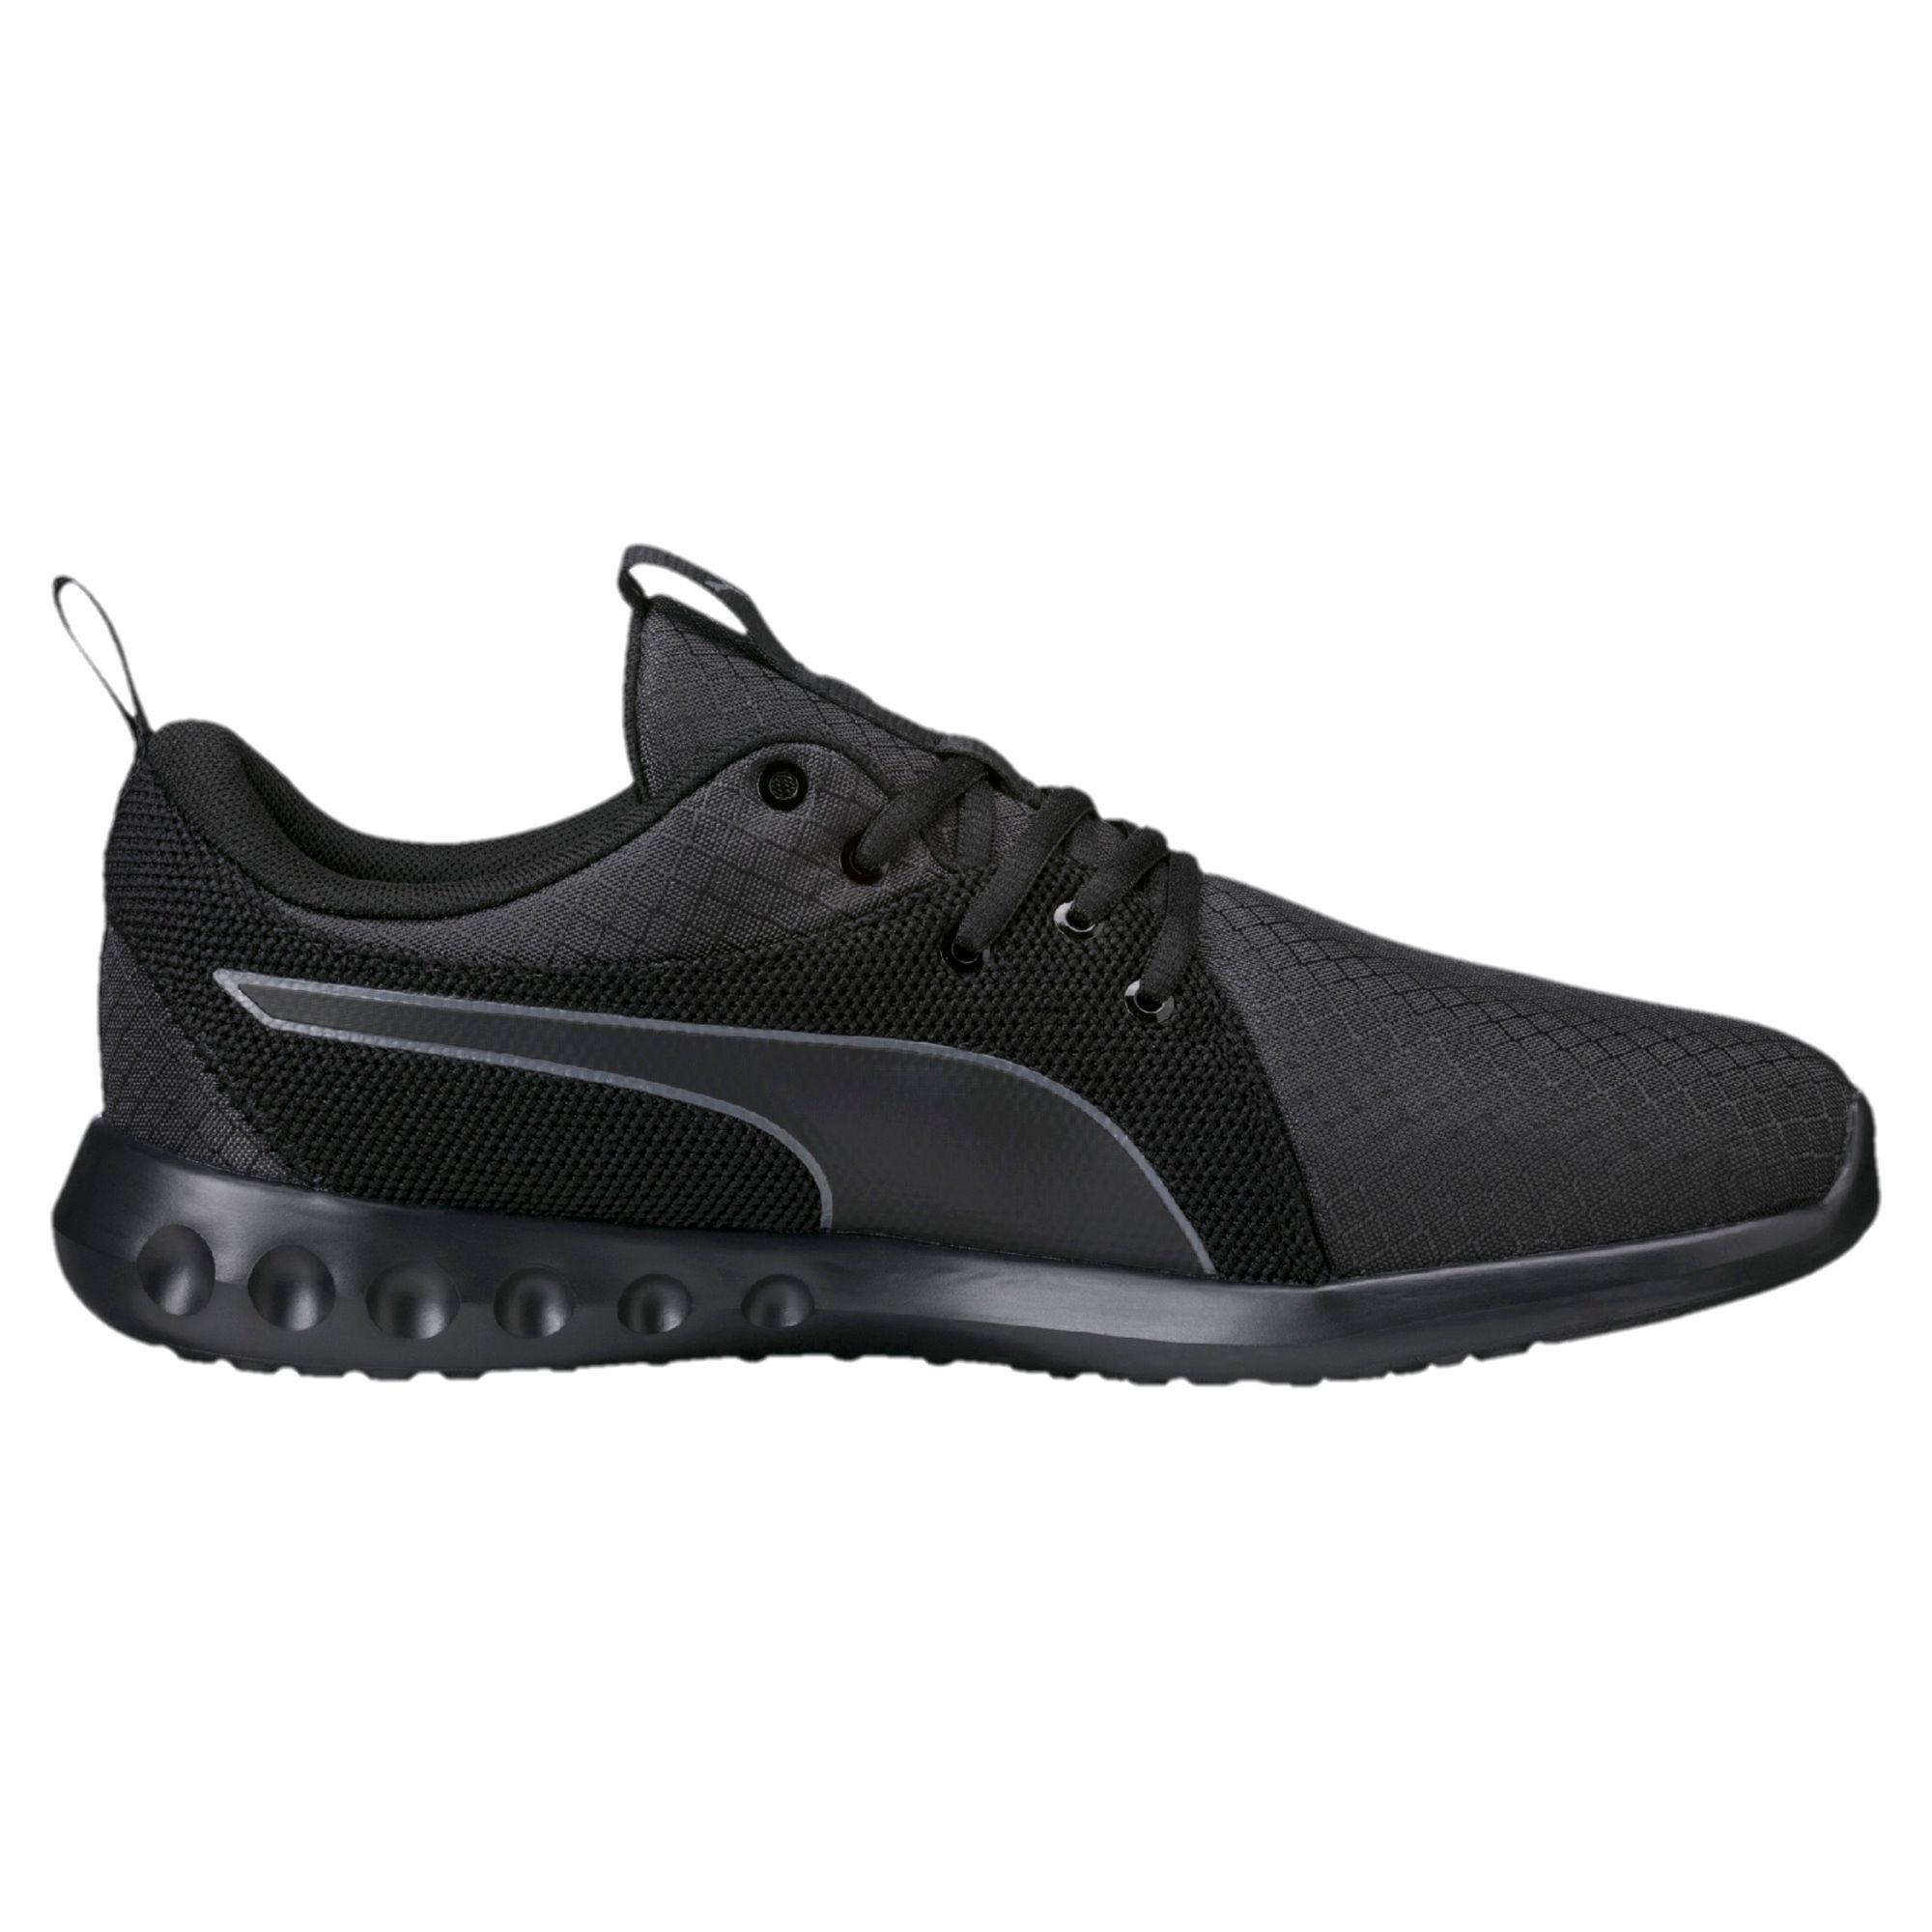 Lyst - Puma Carson 2 Ripstop Men's Running Shoes in Black for Men